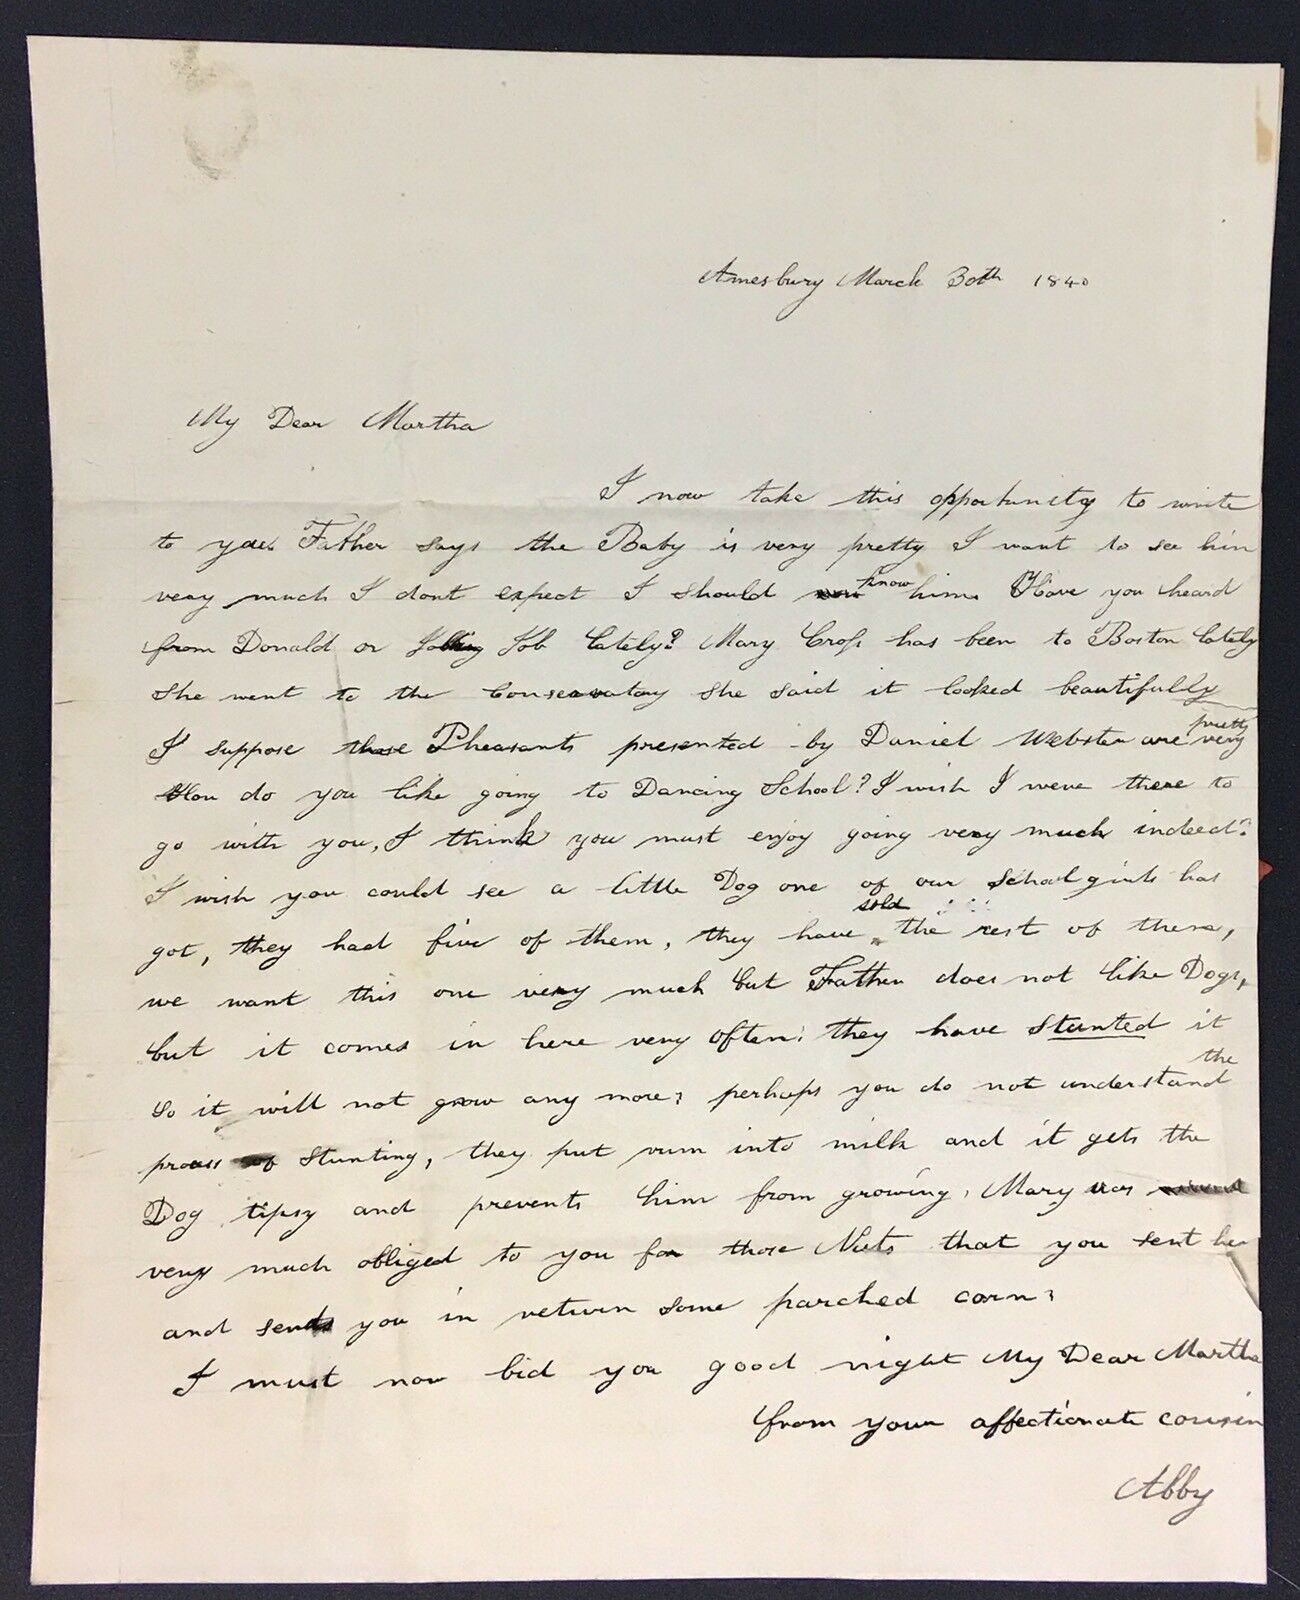 1840 Handwritten Letter Martha Kuhn, Gives Her Dog Rum In Milk To Make It Tipsy